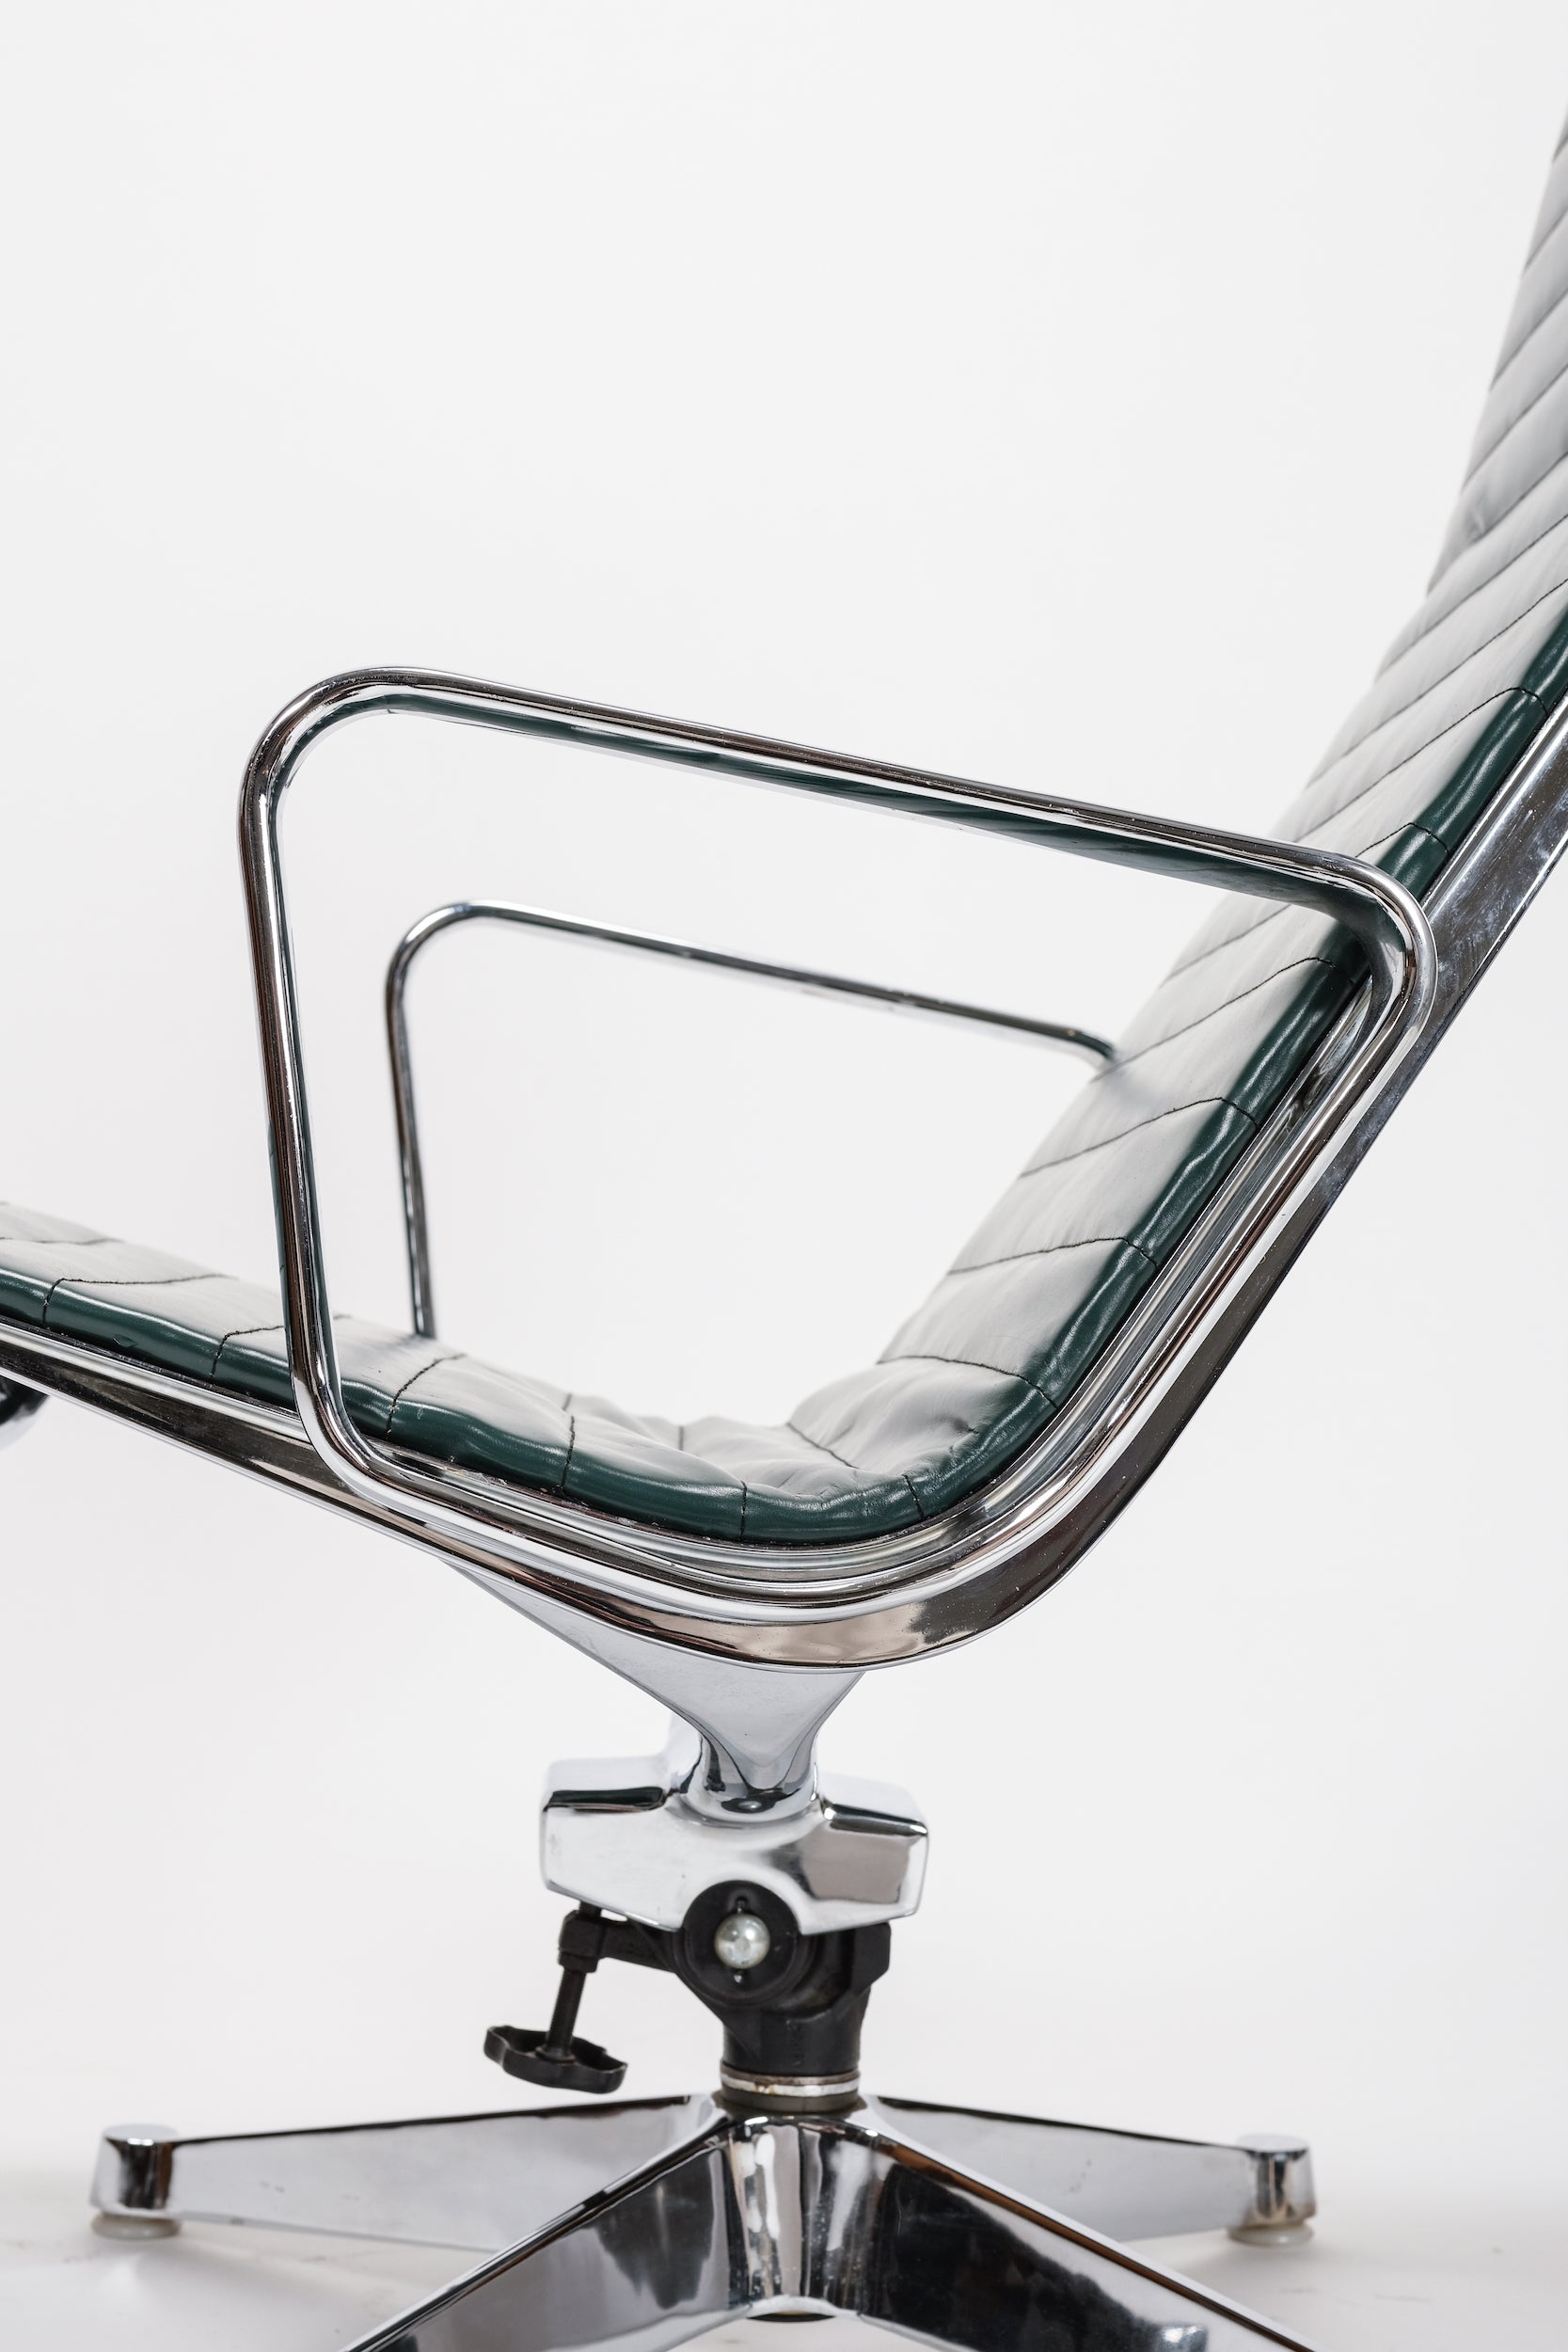 2 Charles Eames Aluminium Group Lounge Chairs, Hermann Miller, 60er